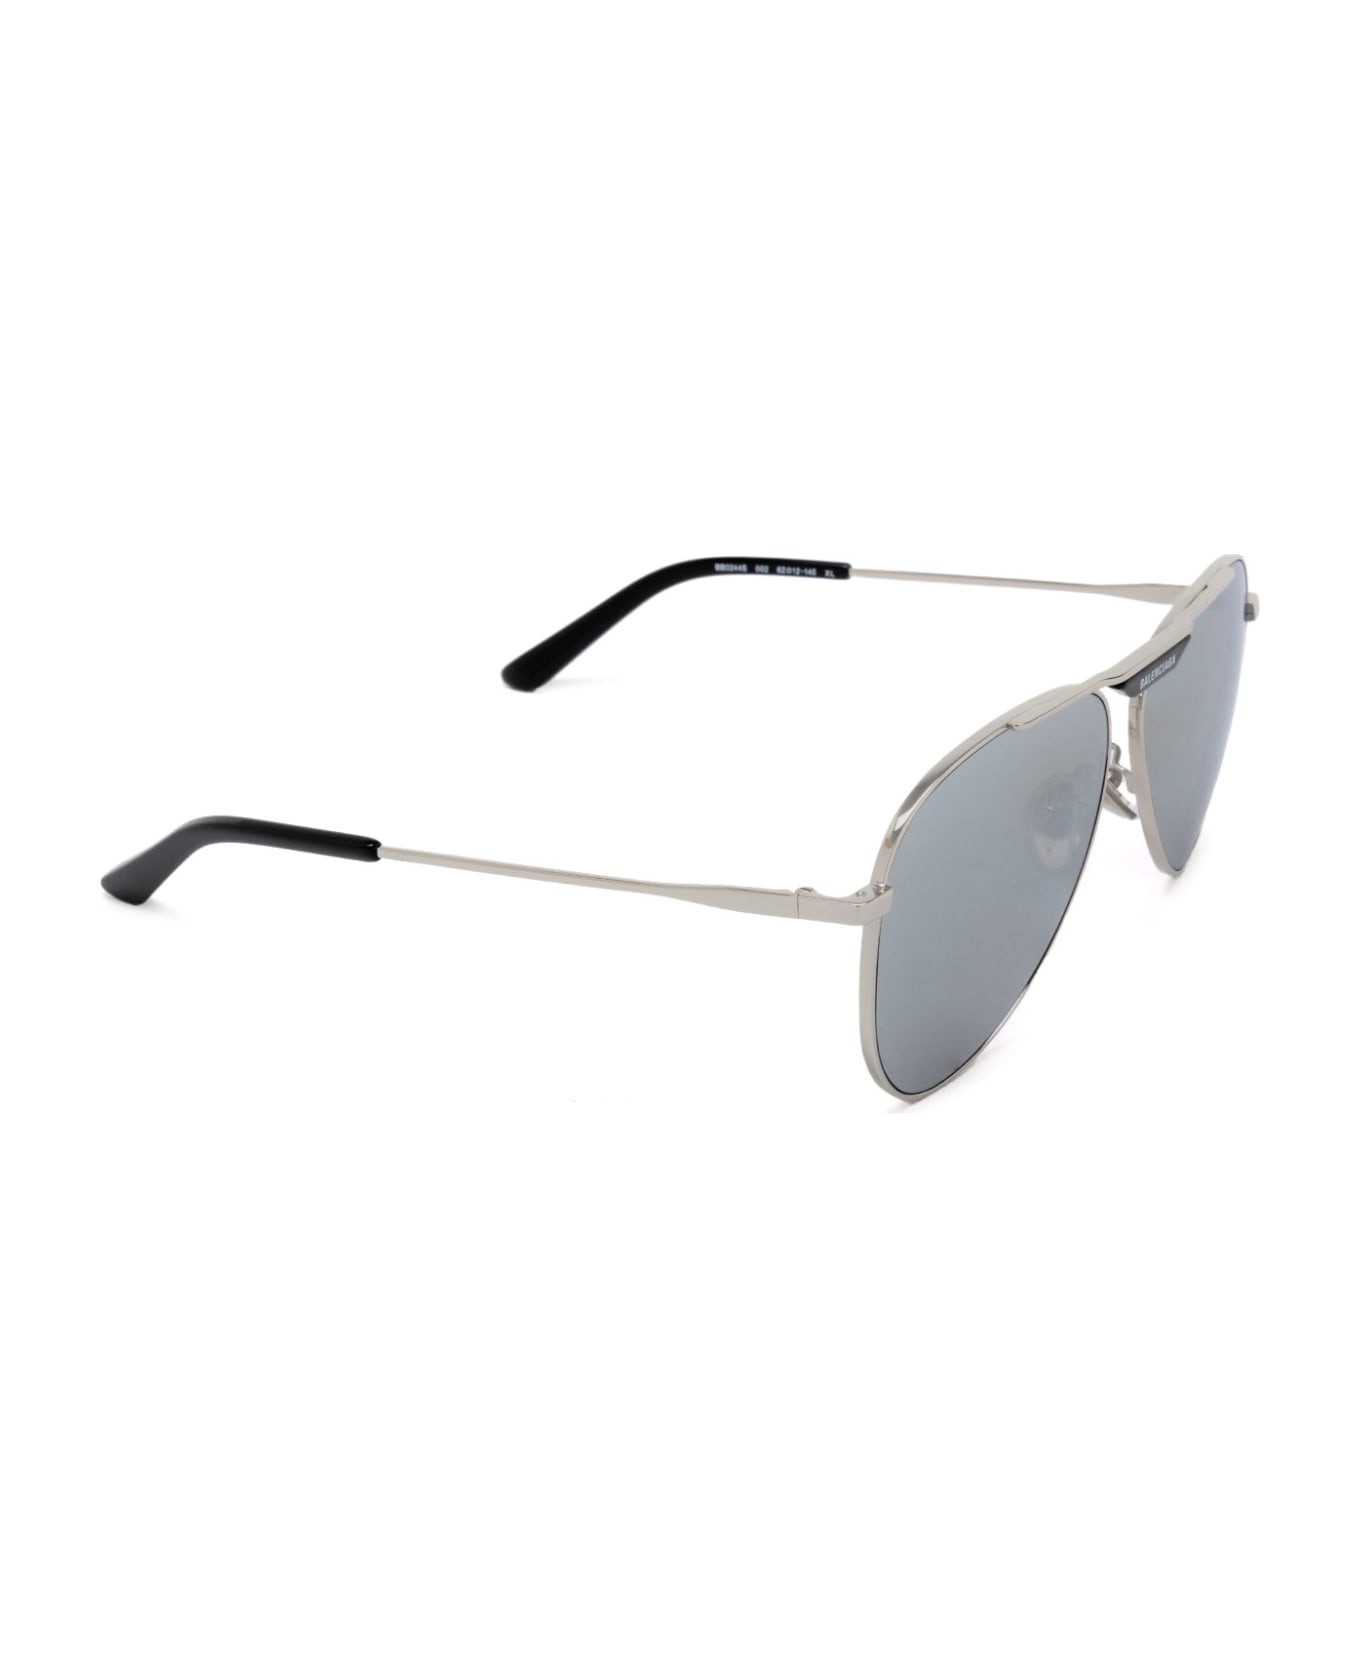 Balenciaga Eyewear Bb0244s Silver Sunglasses - Silver